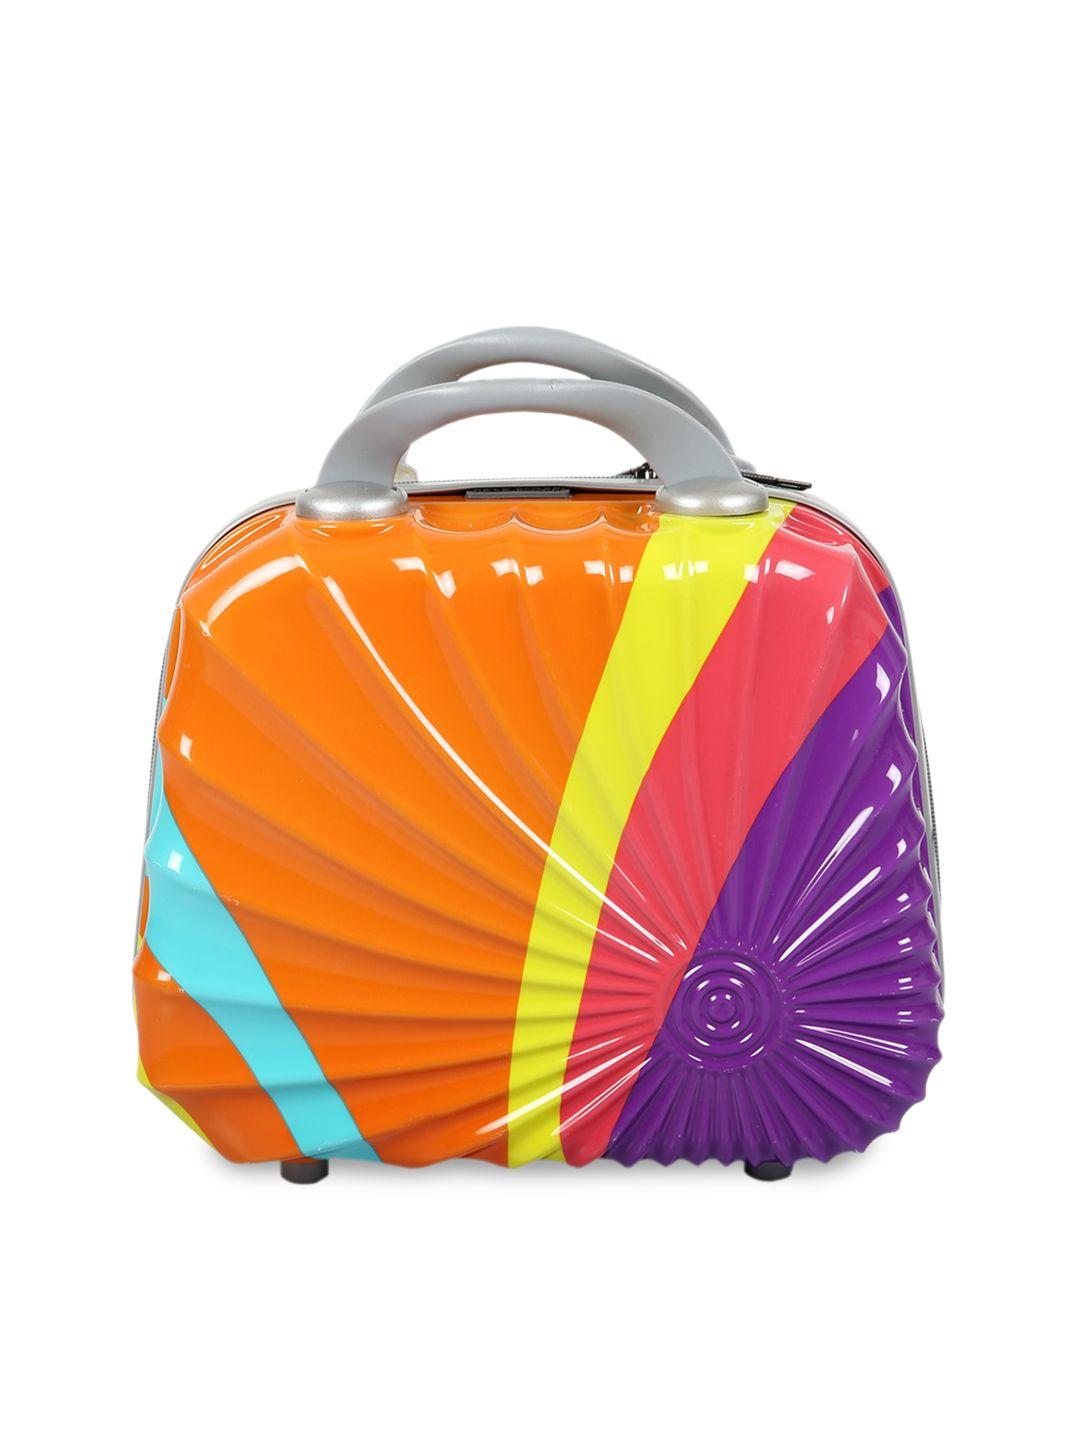 polo class orange & purple printed travel vanity bag